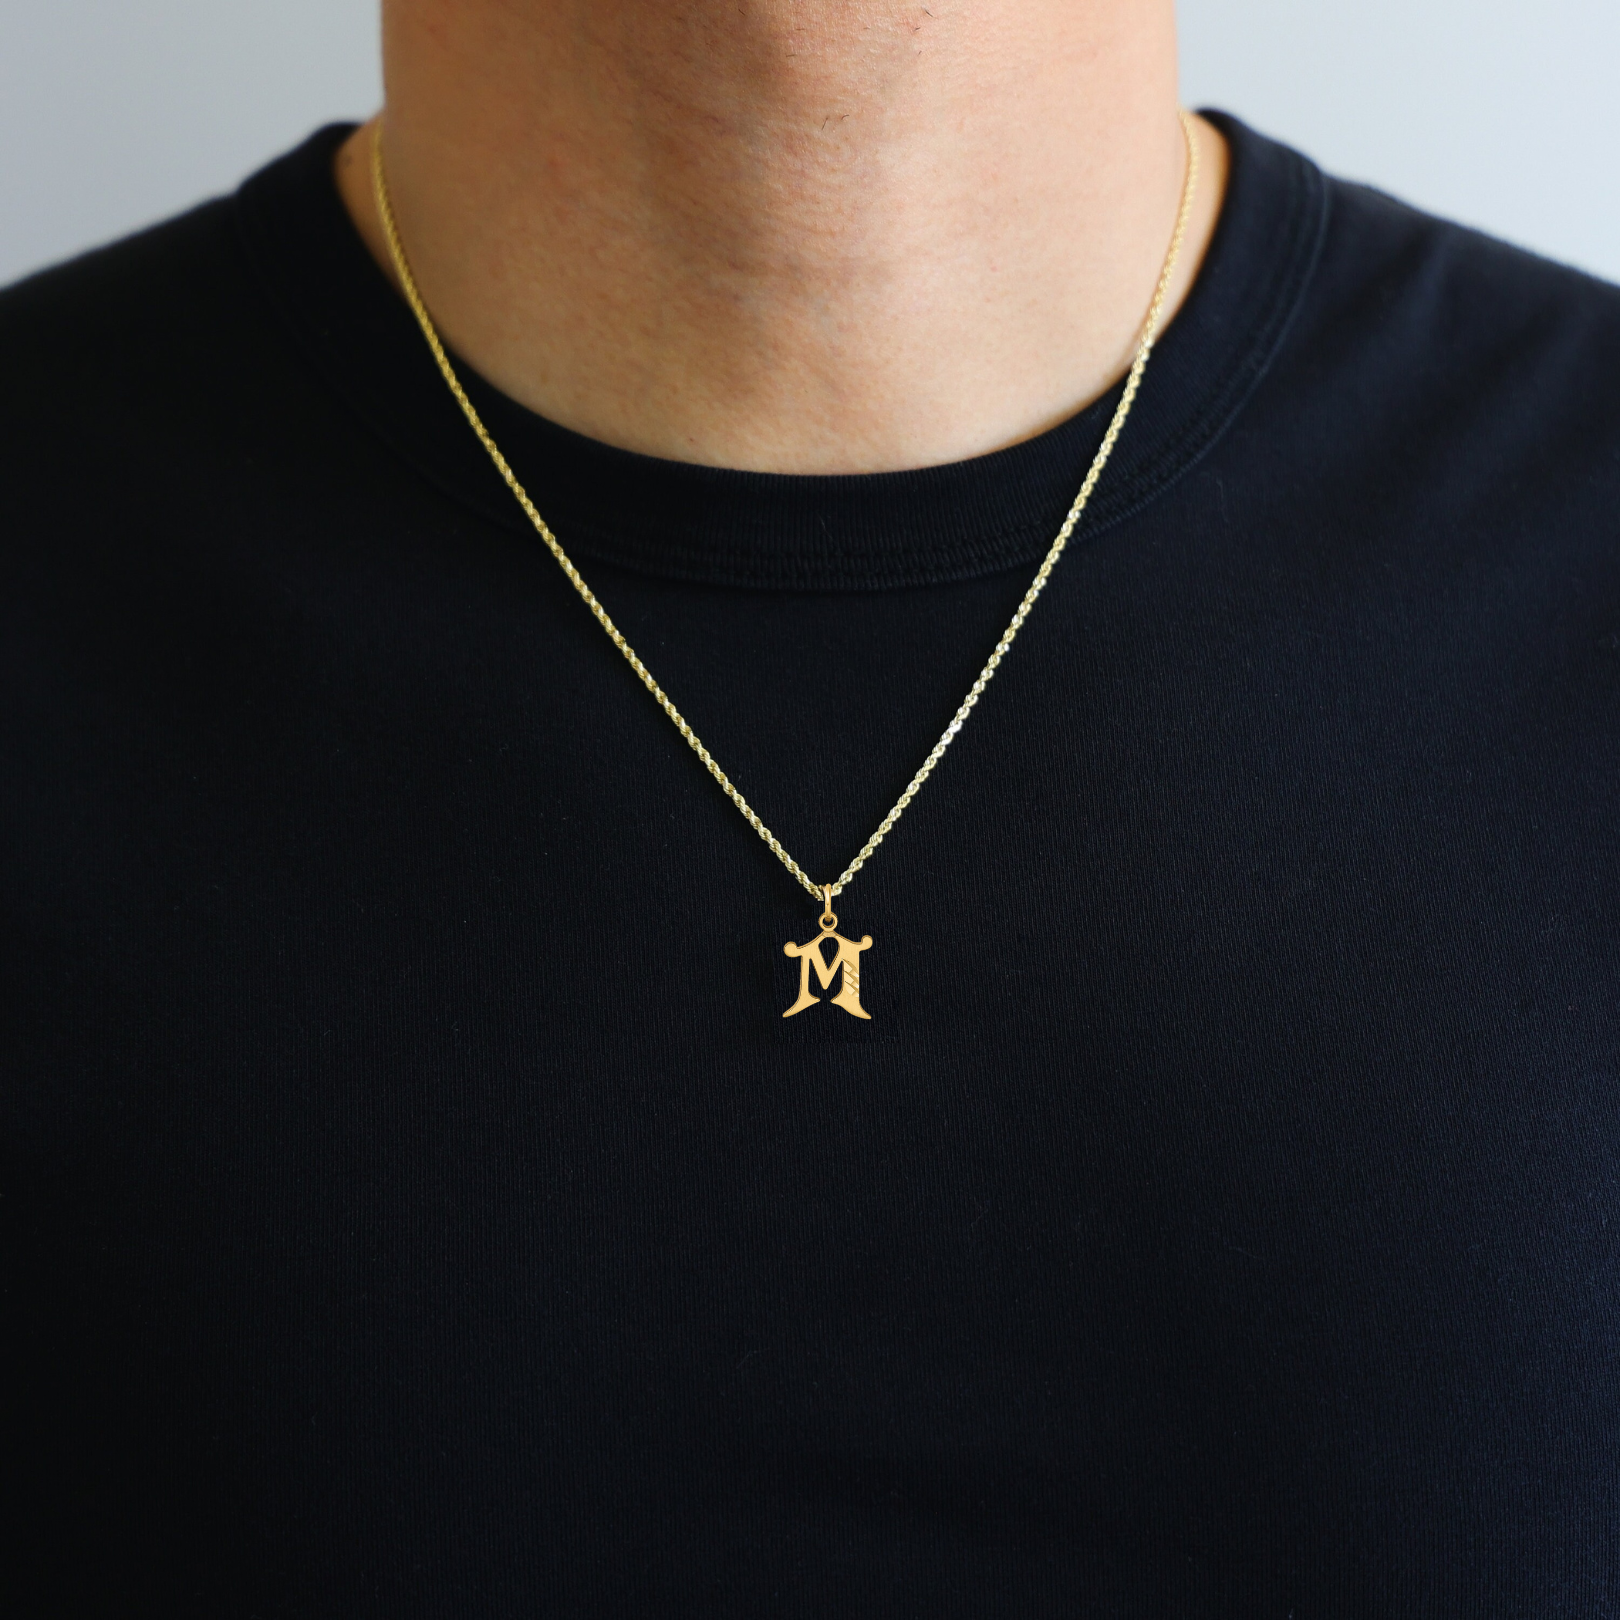 Gold Elegant Letter 'M' Charm  Model-C4833 - Charlie & Co. Jewelry